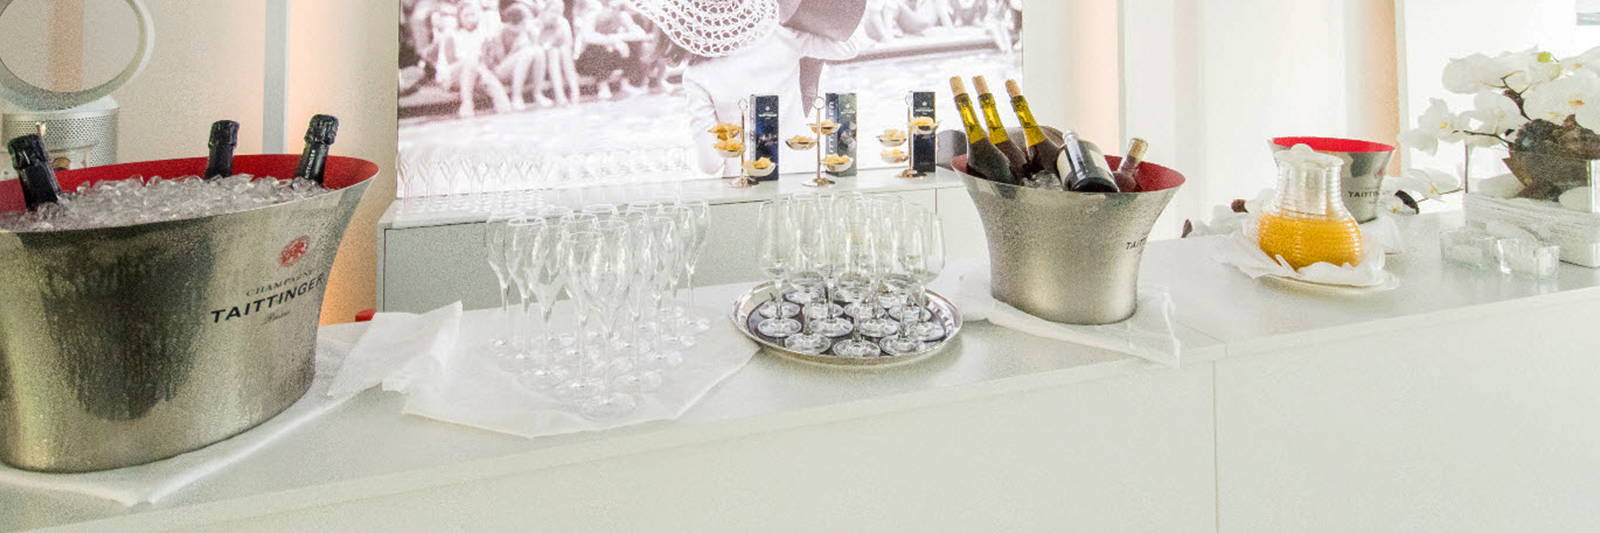 Champagner Bar Theke mieten für Apéro Event oder Produkte Promotion Anlass